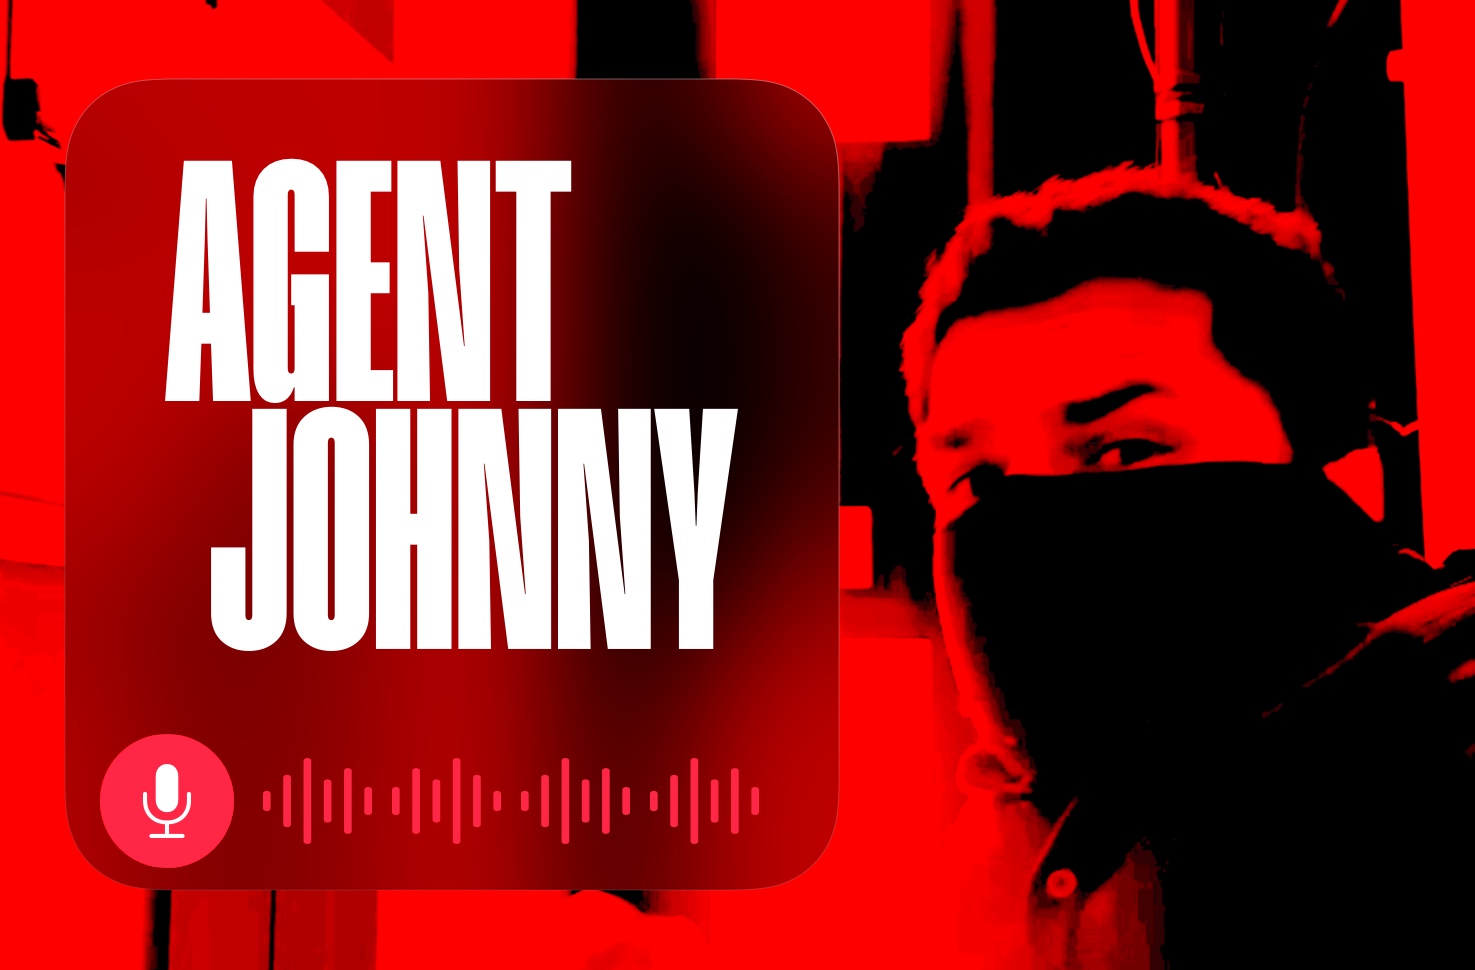 Agent Johnny